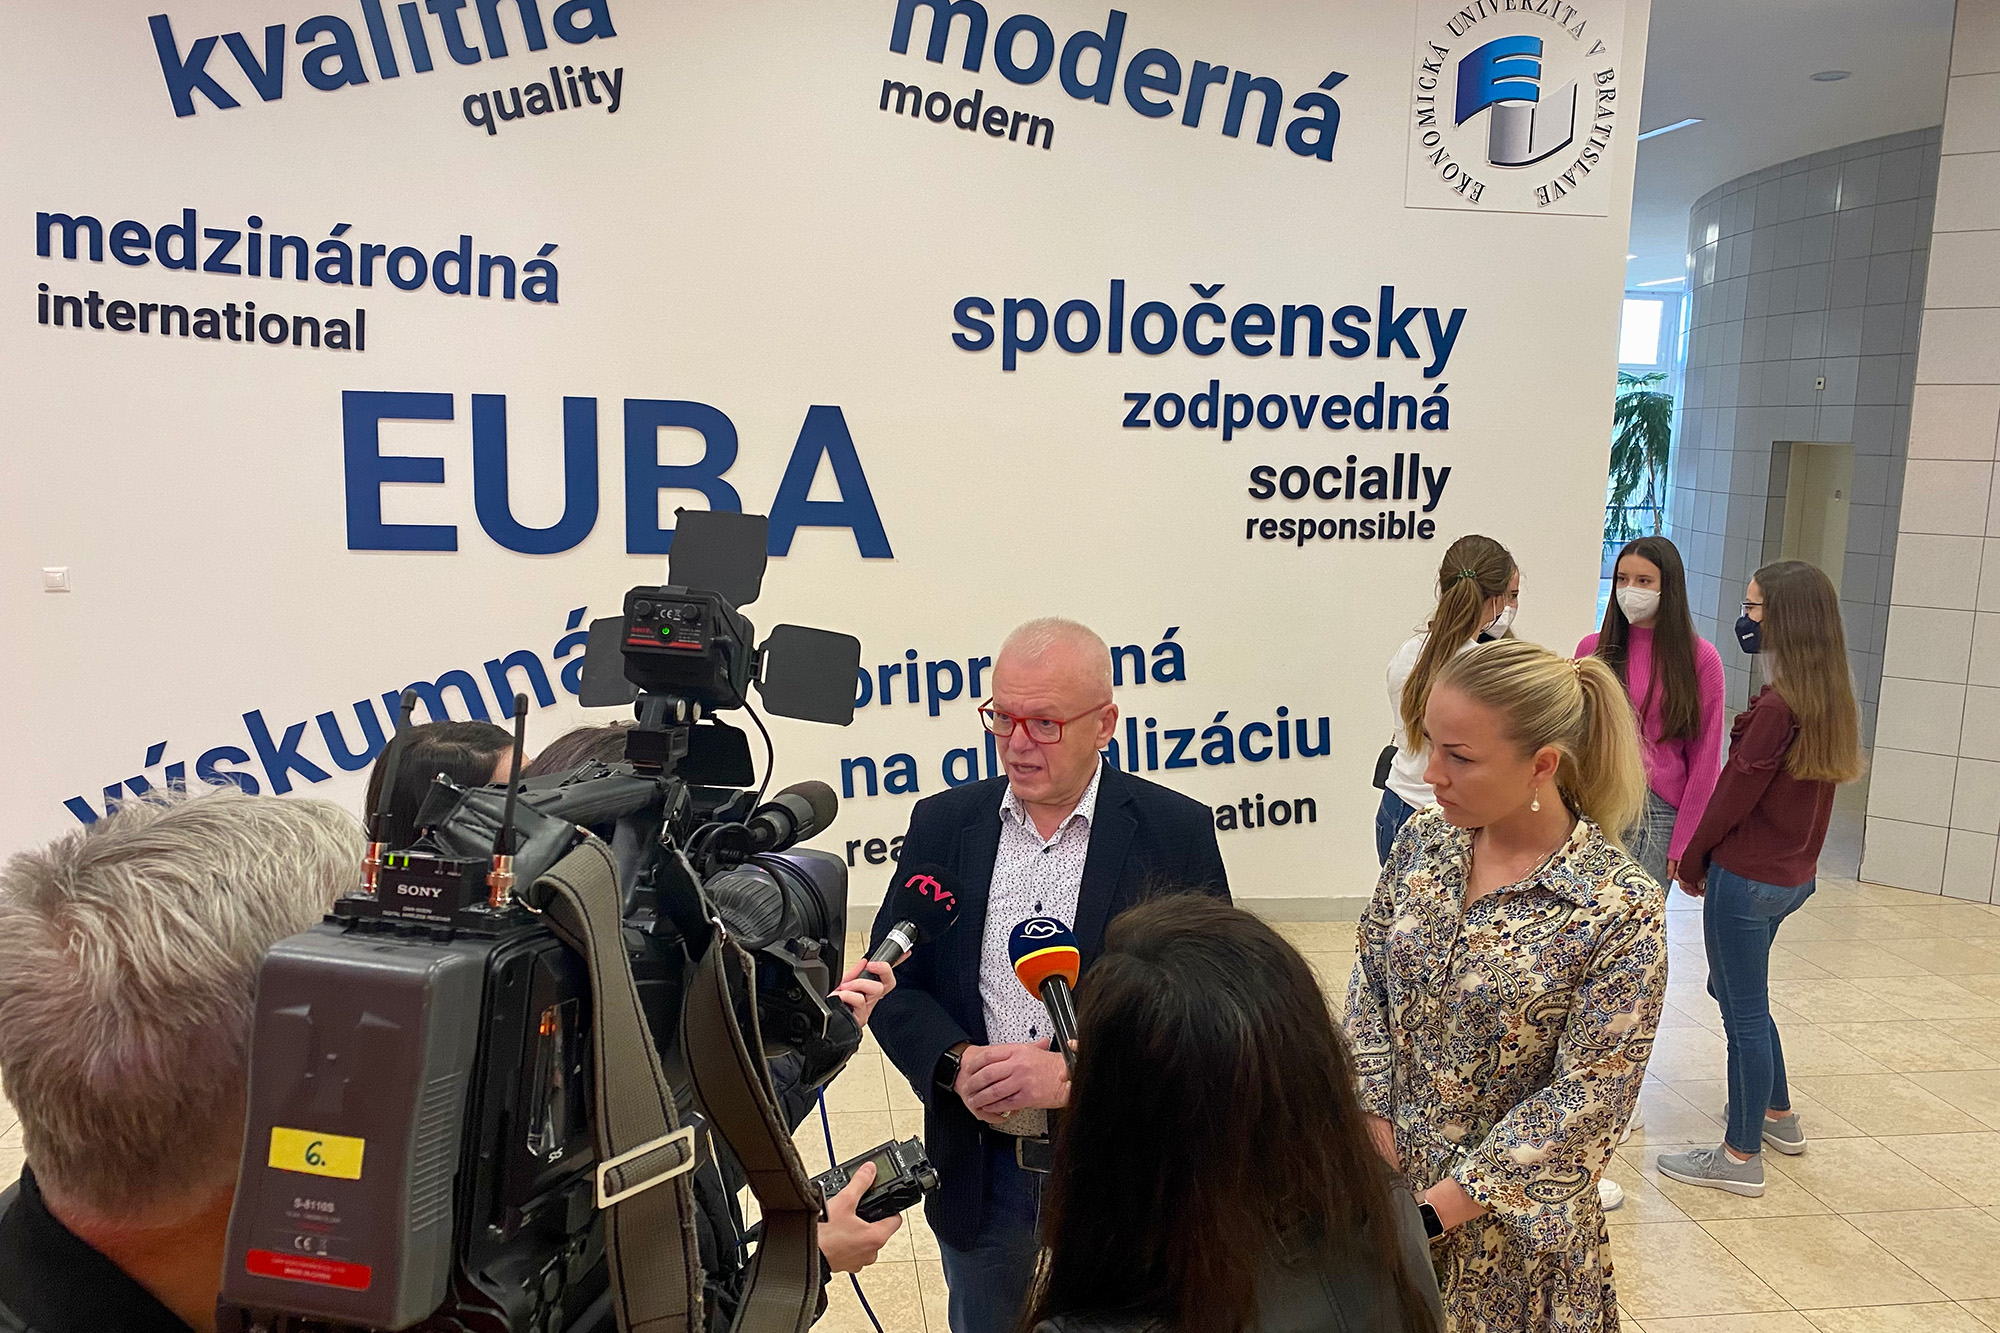 EUBA s jazykovou školou iCan otvorili intenzívny jazykový kurz slovenčiny pre desiatky ukrajinských študentov.